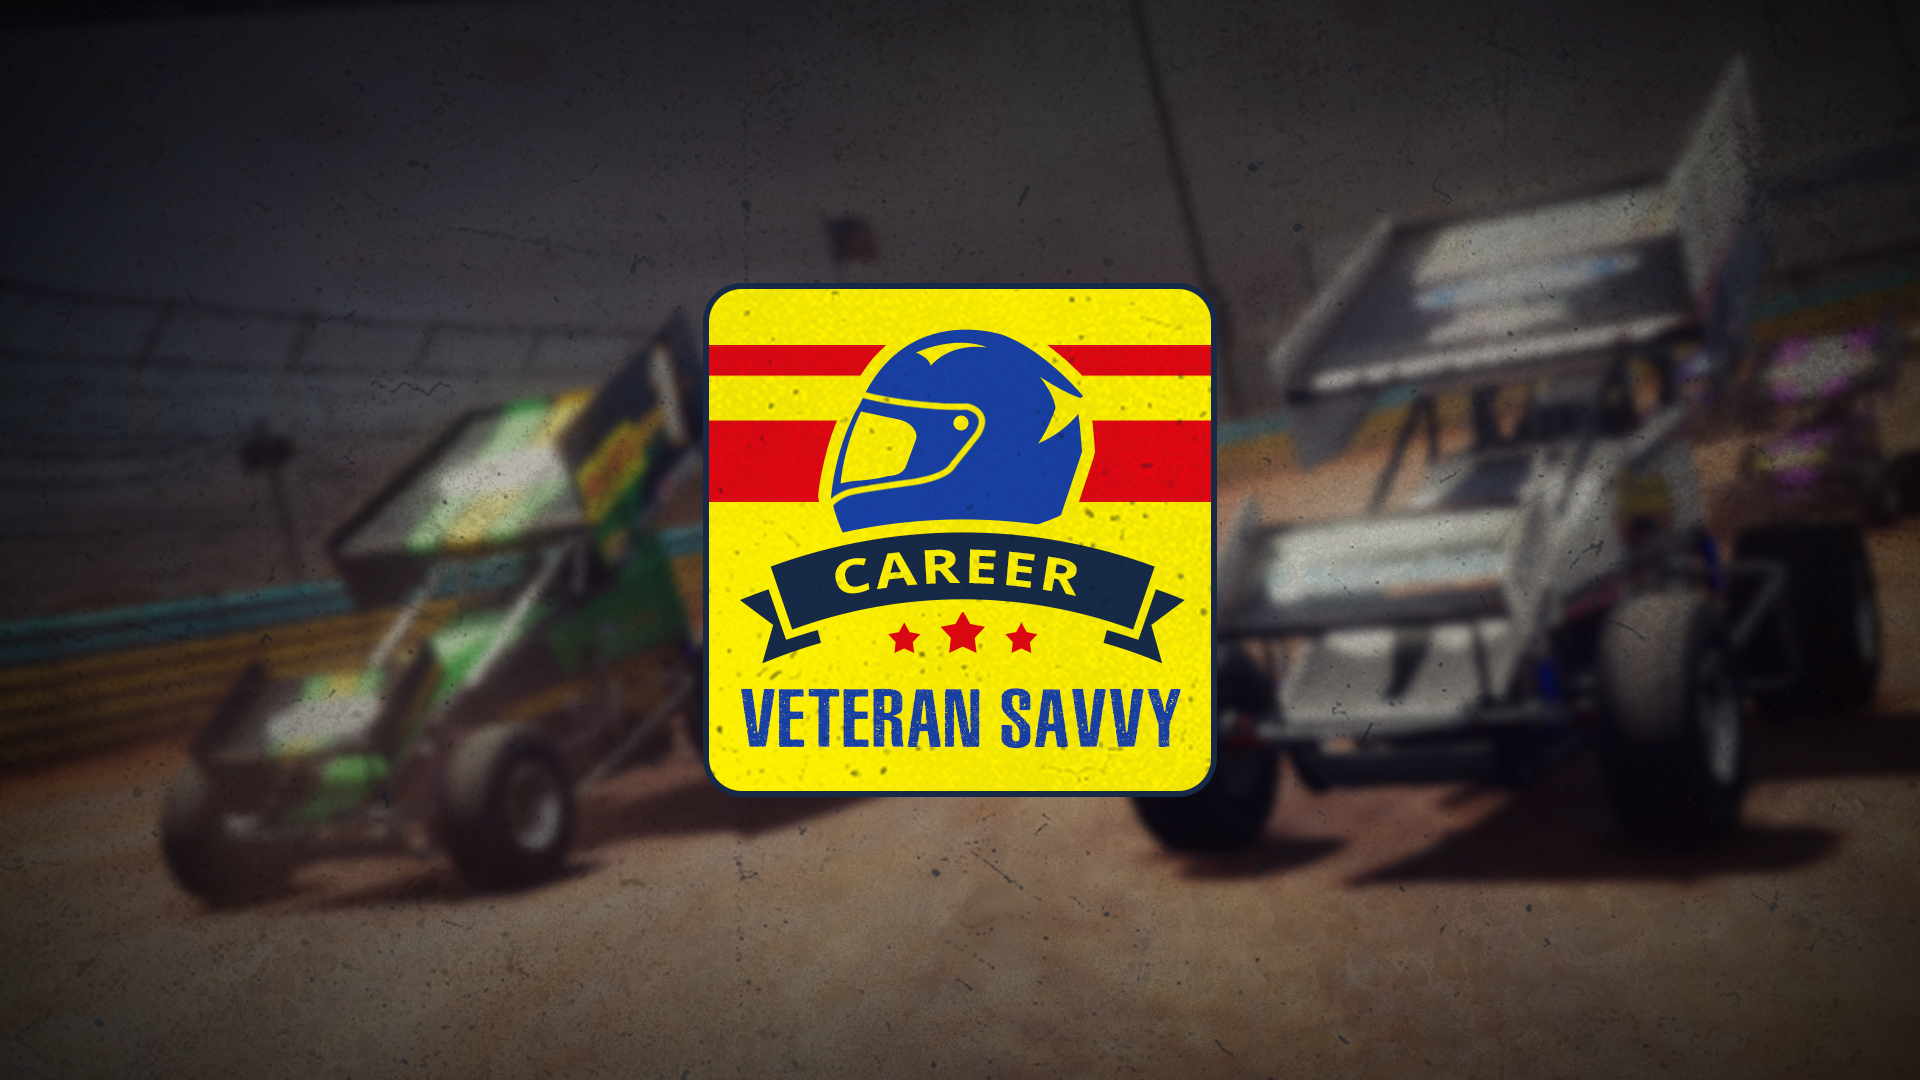 Icon for Veteran Savvy